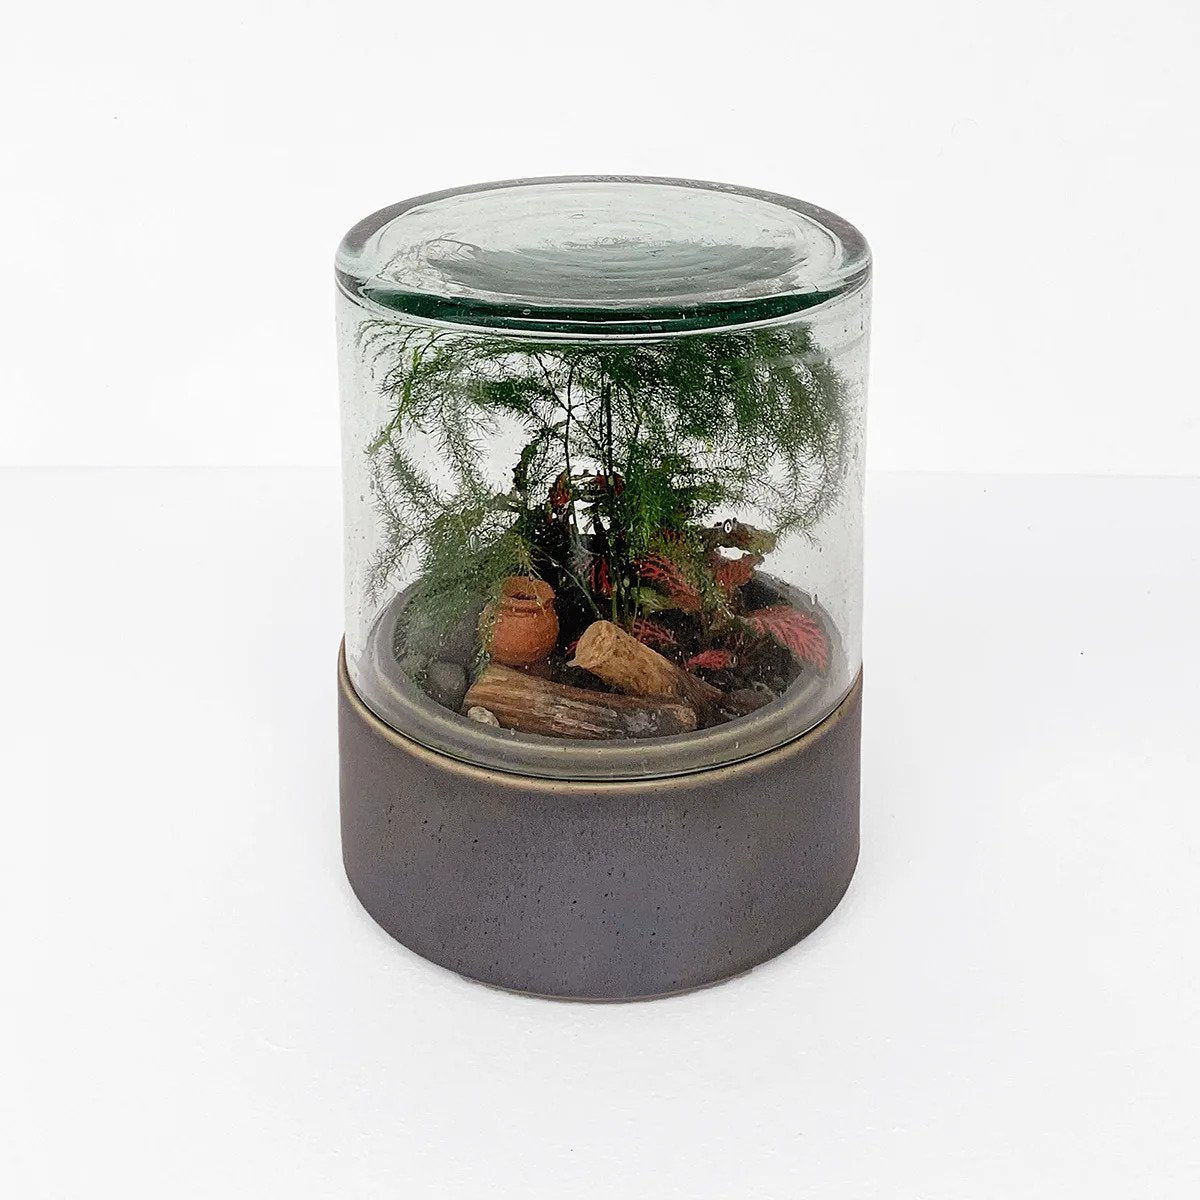 Terrario Lillipot | Kit con plantas